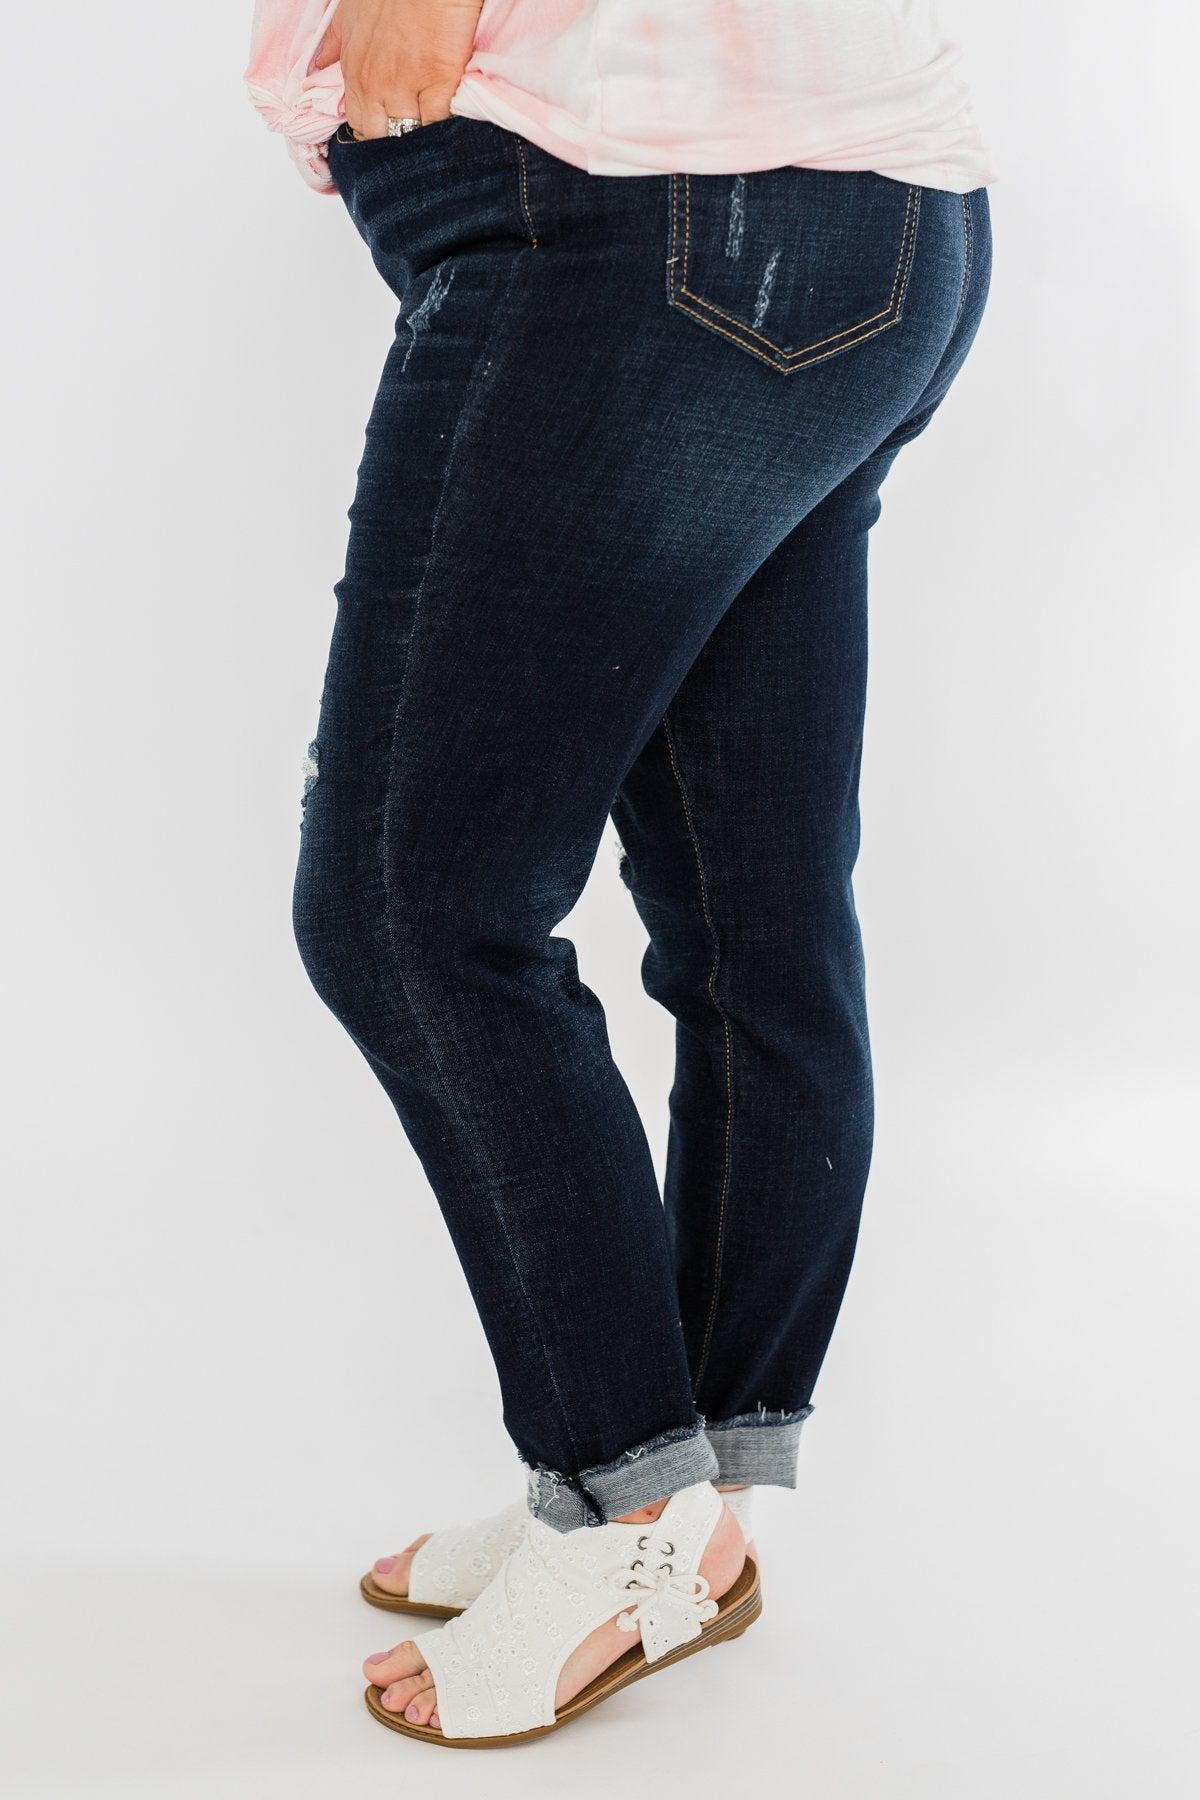 YMI Raw Hem Skinny Jeans- Cassandra Wash